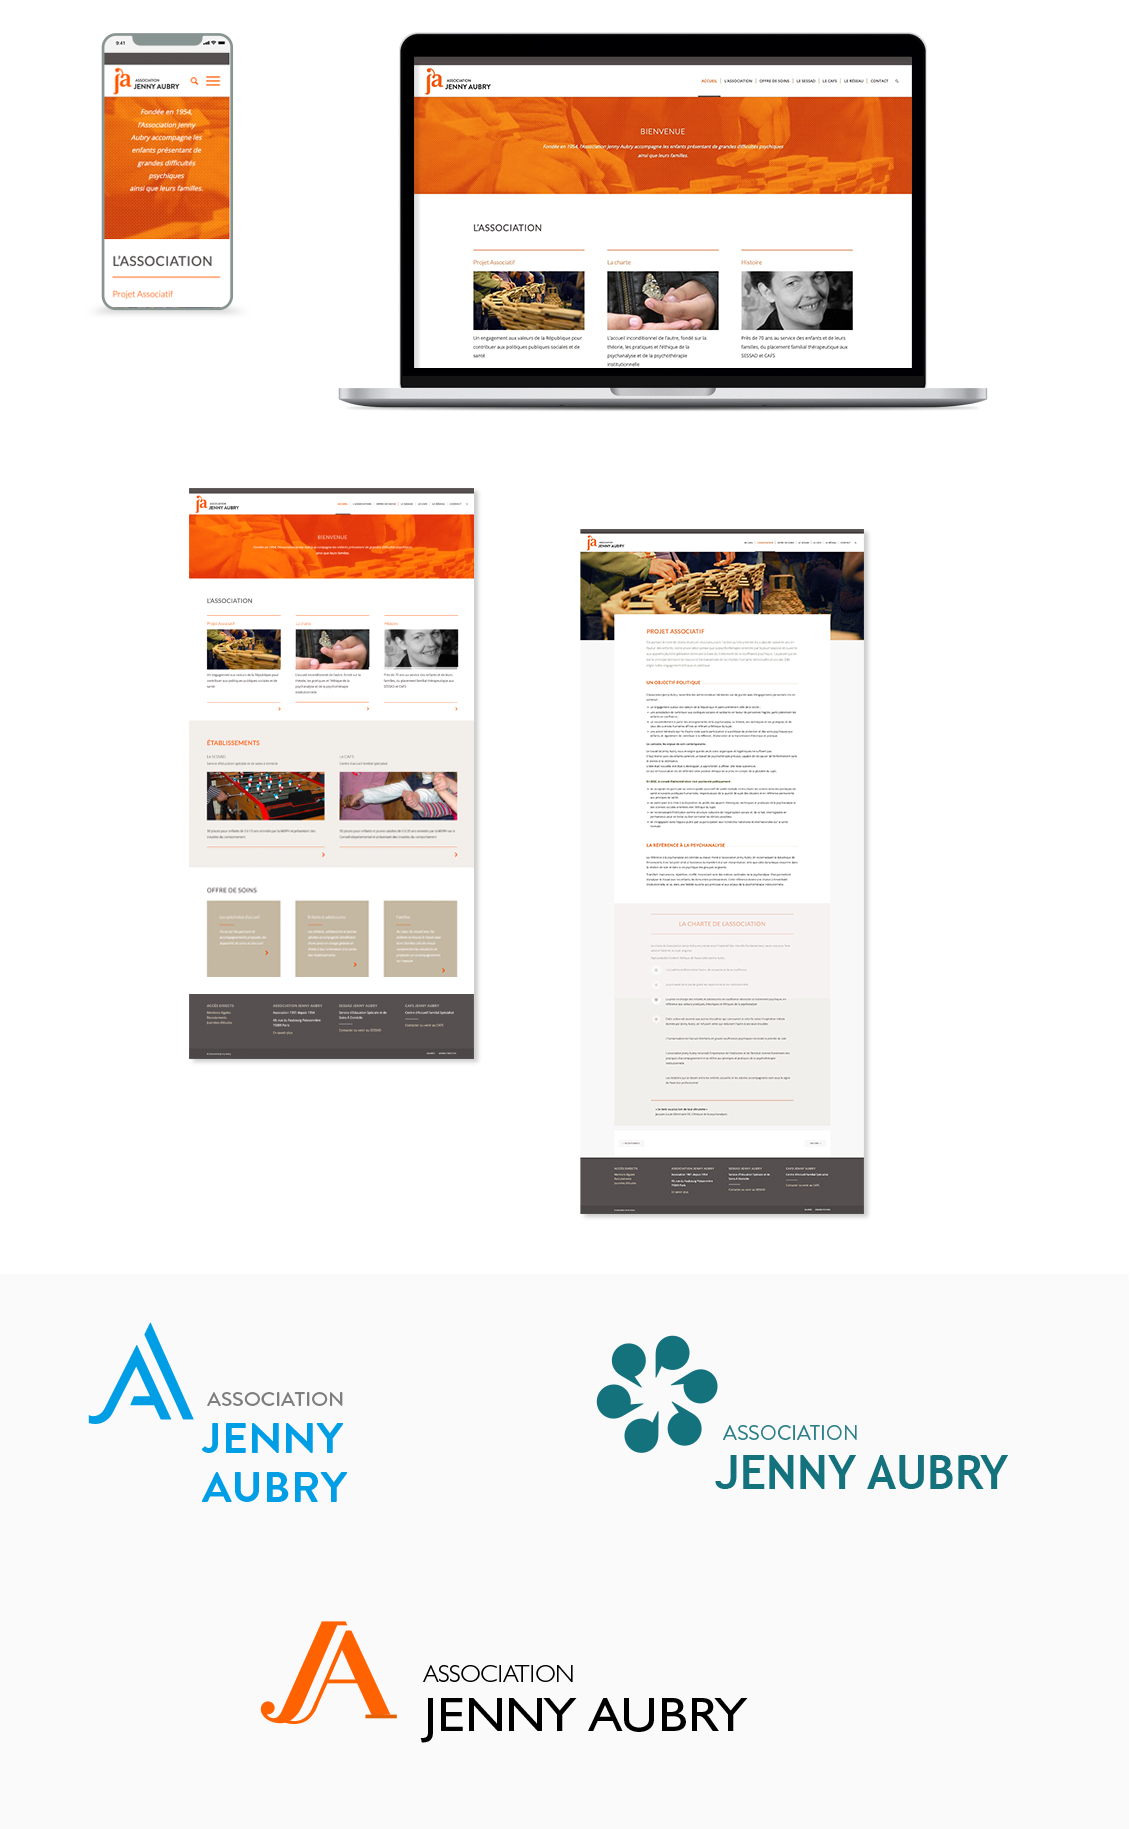 Association Jenny Aubry - identité visuelle - logo et website